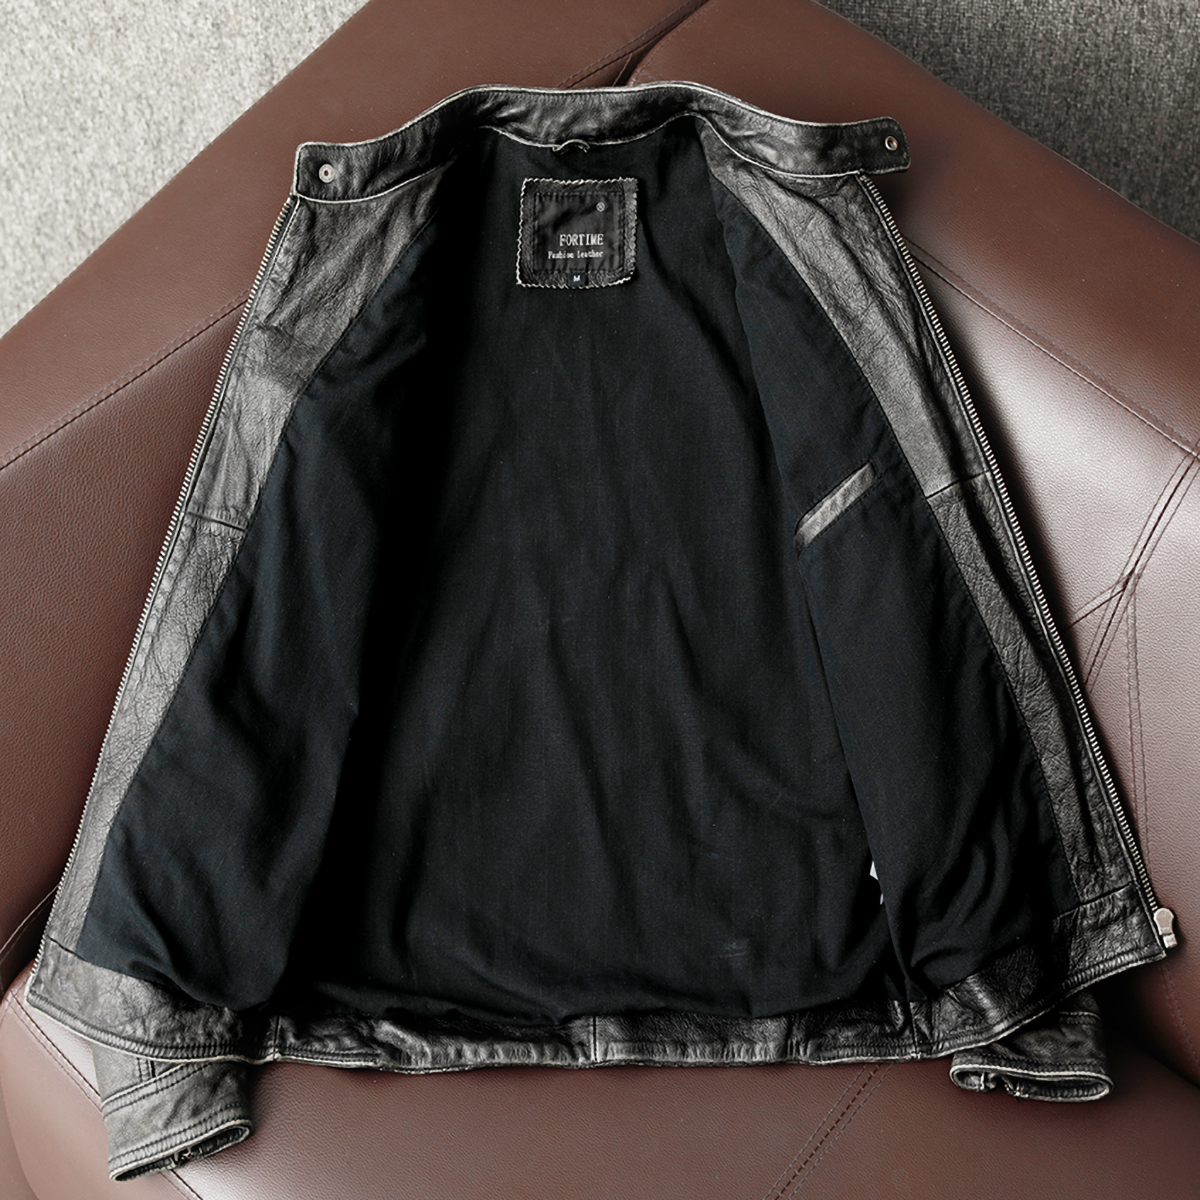 Gray Motorcycle Genuine Leather Jacket